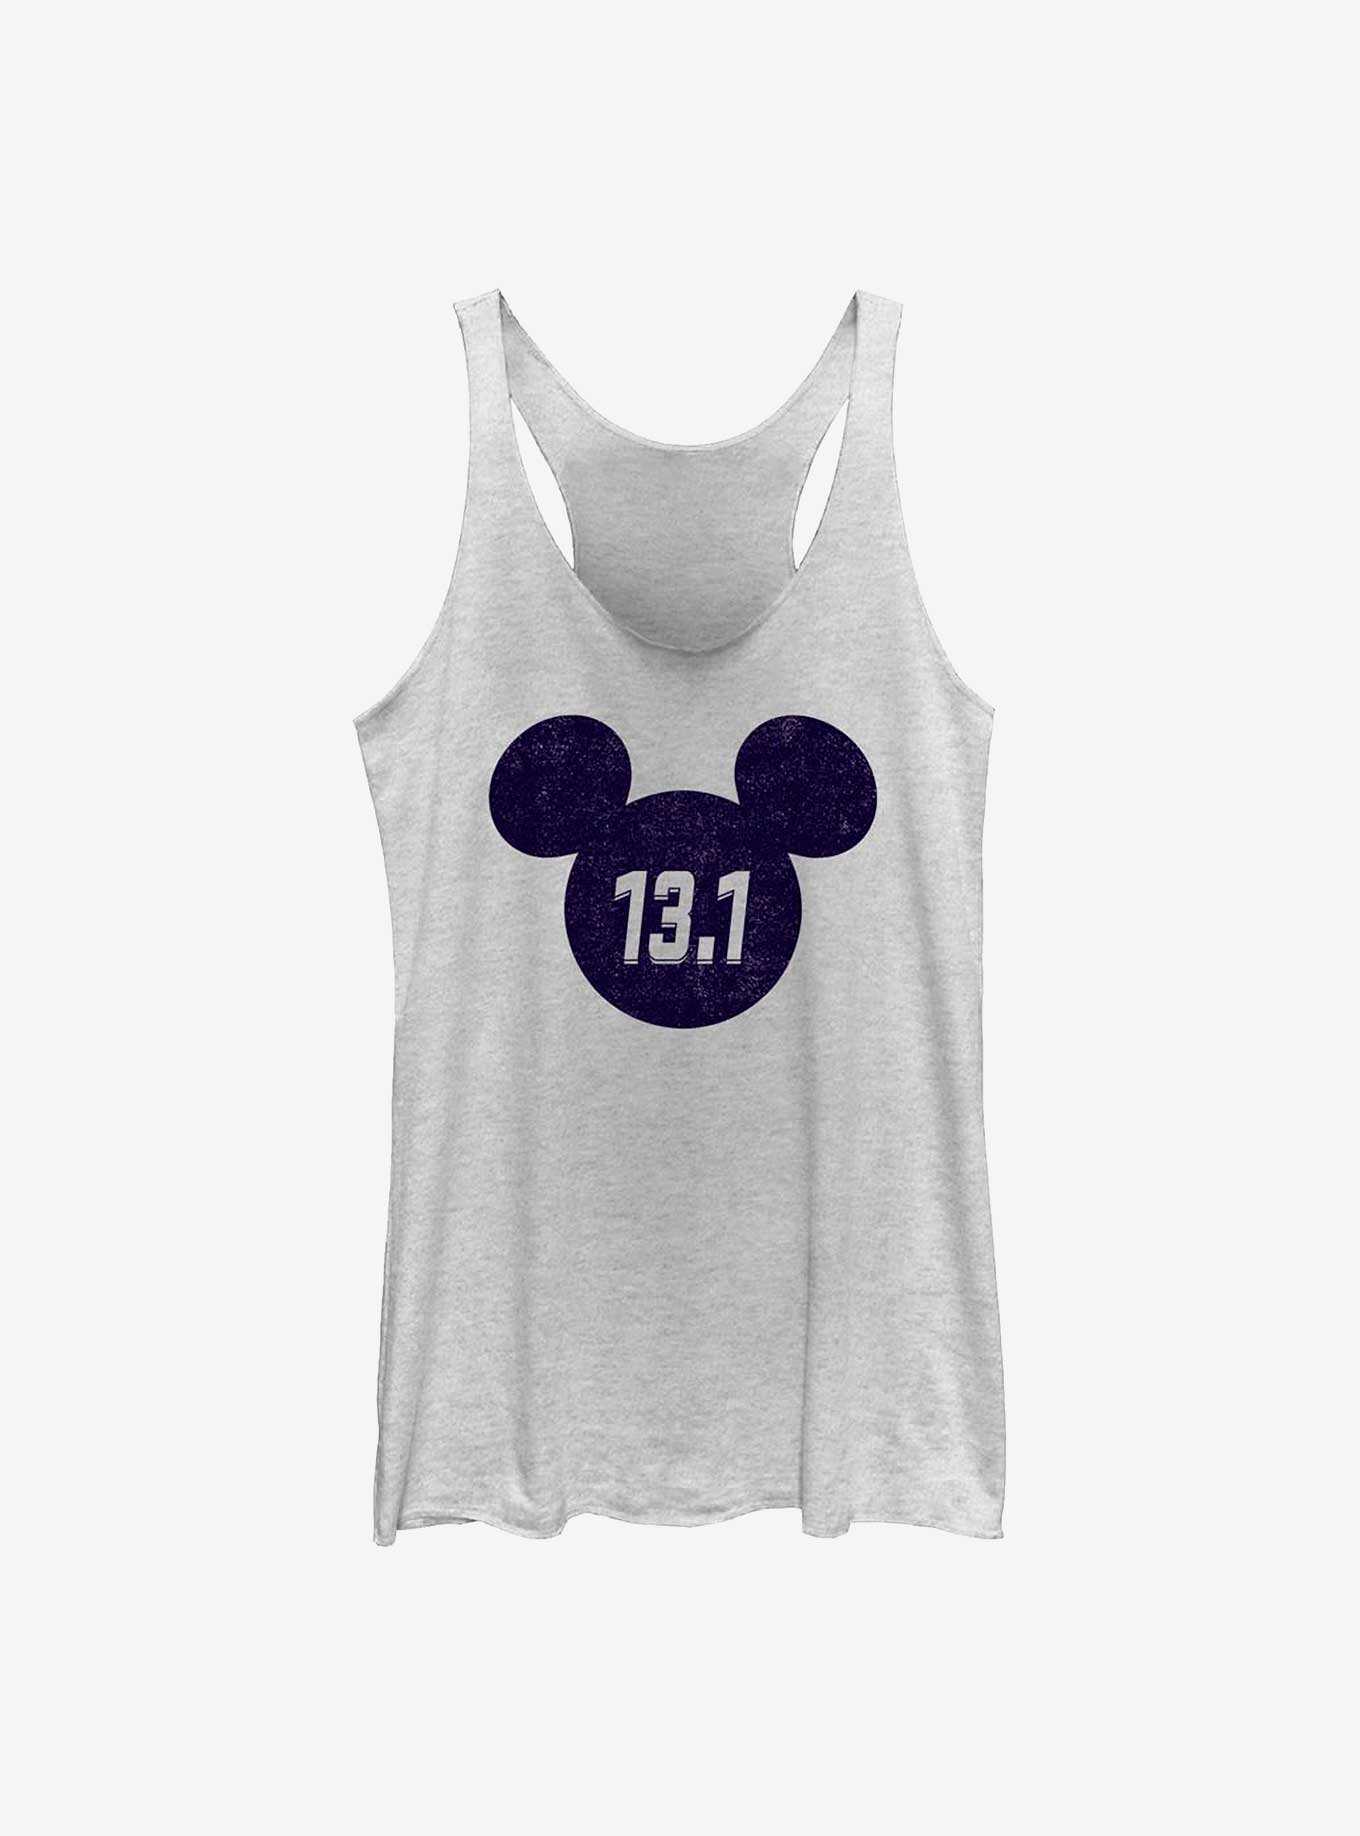 Disney Mickey Mouse 13.1 Half Marathon Ears Girls Tank, , hi-res